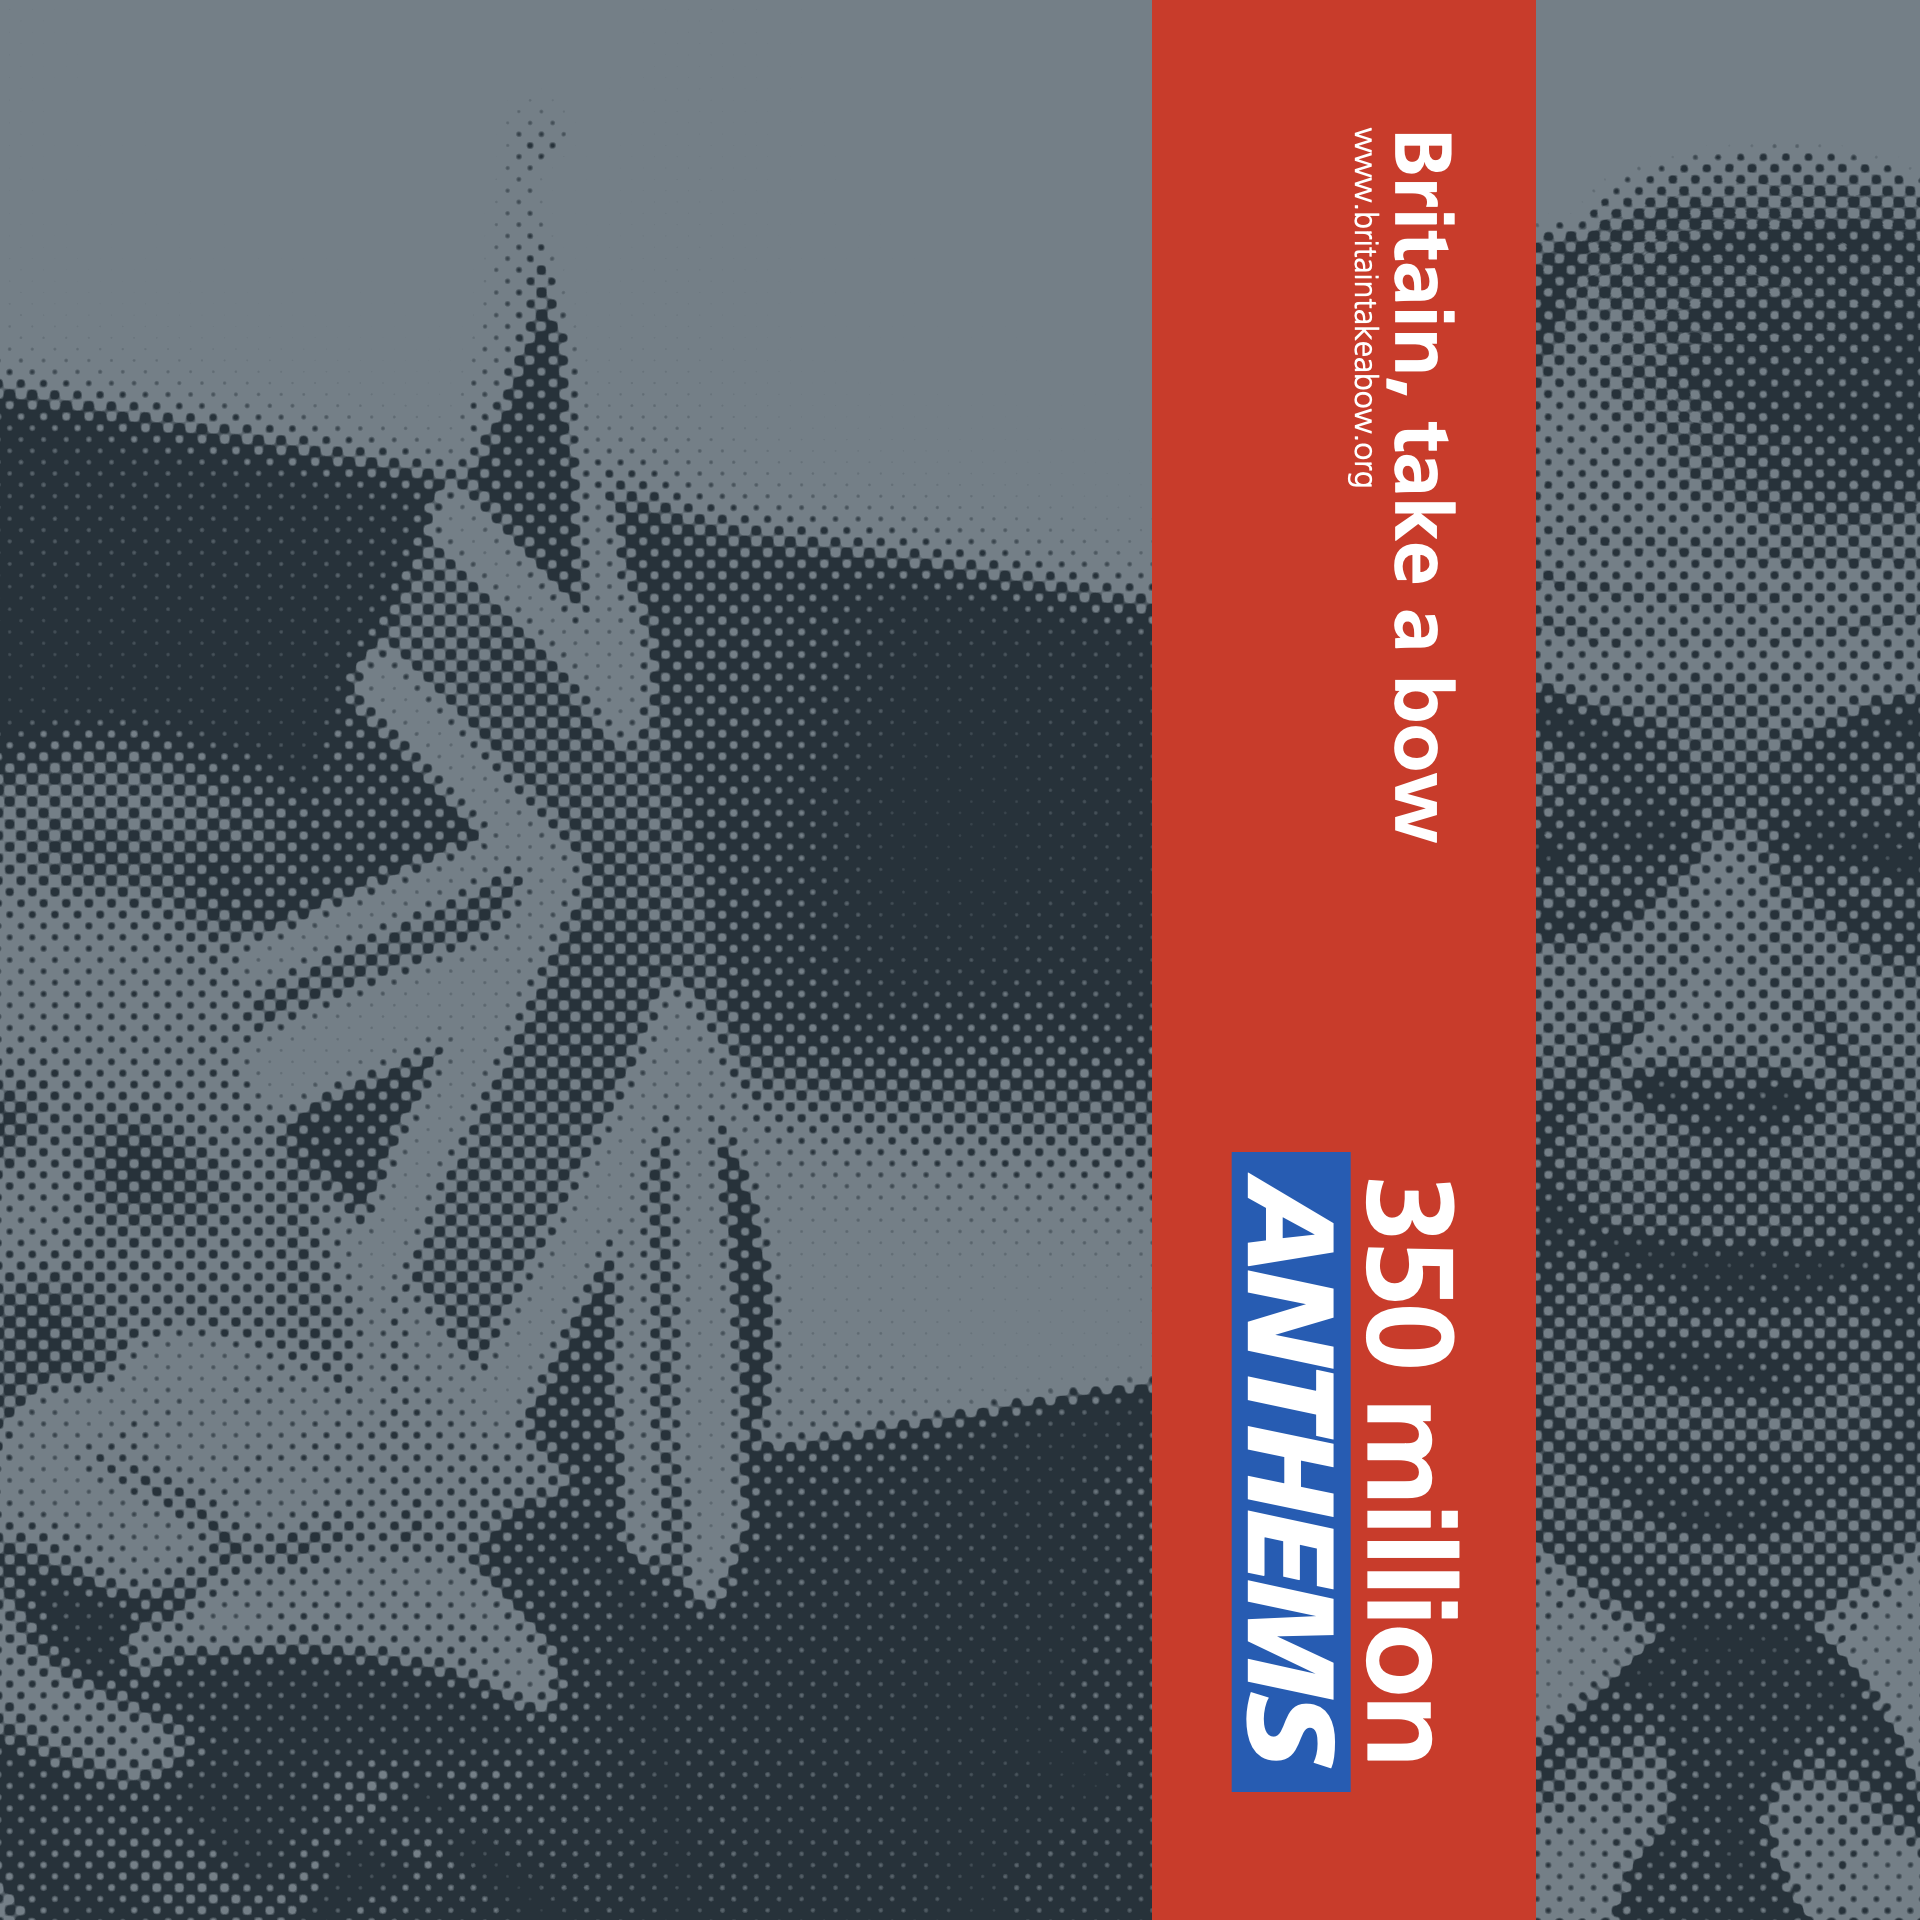 Anthem 5 cover art showing Nigel Farage waving a UK flag